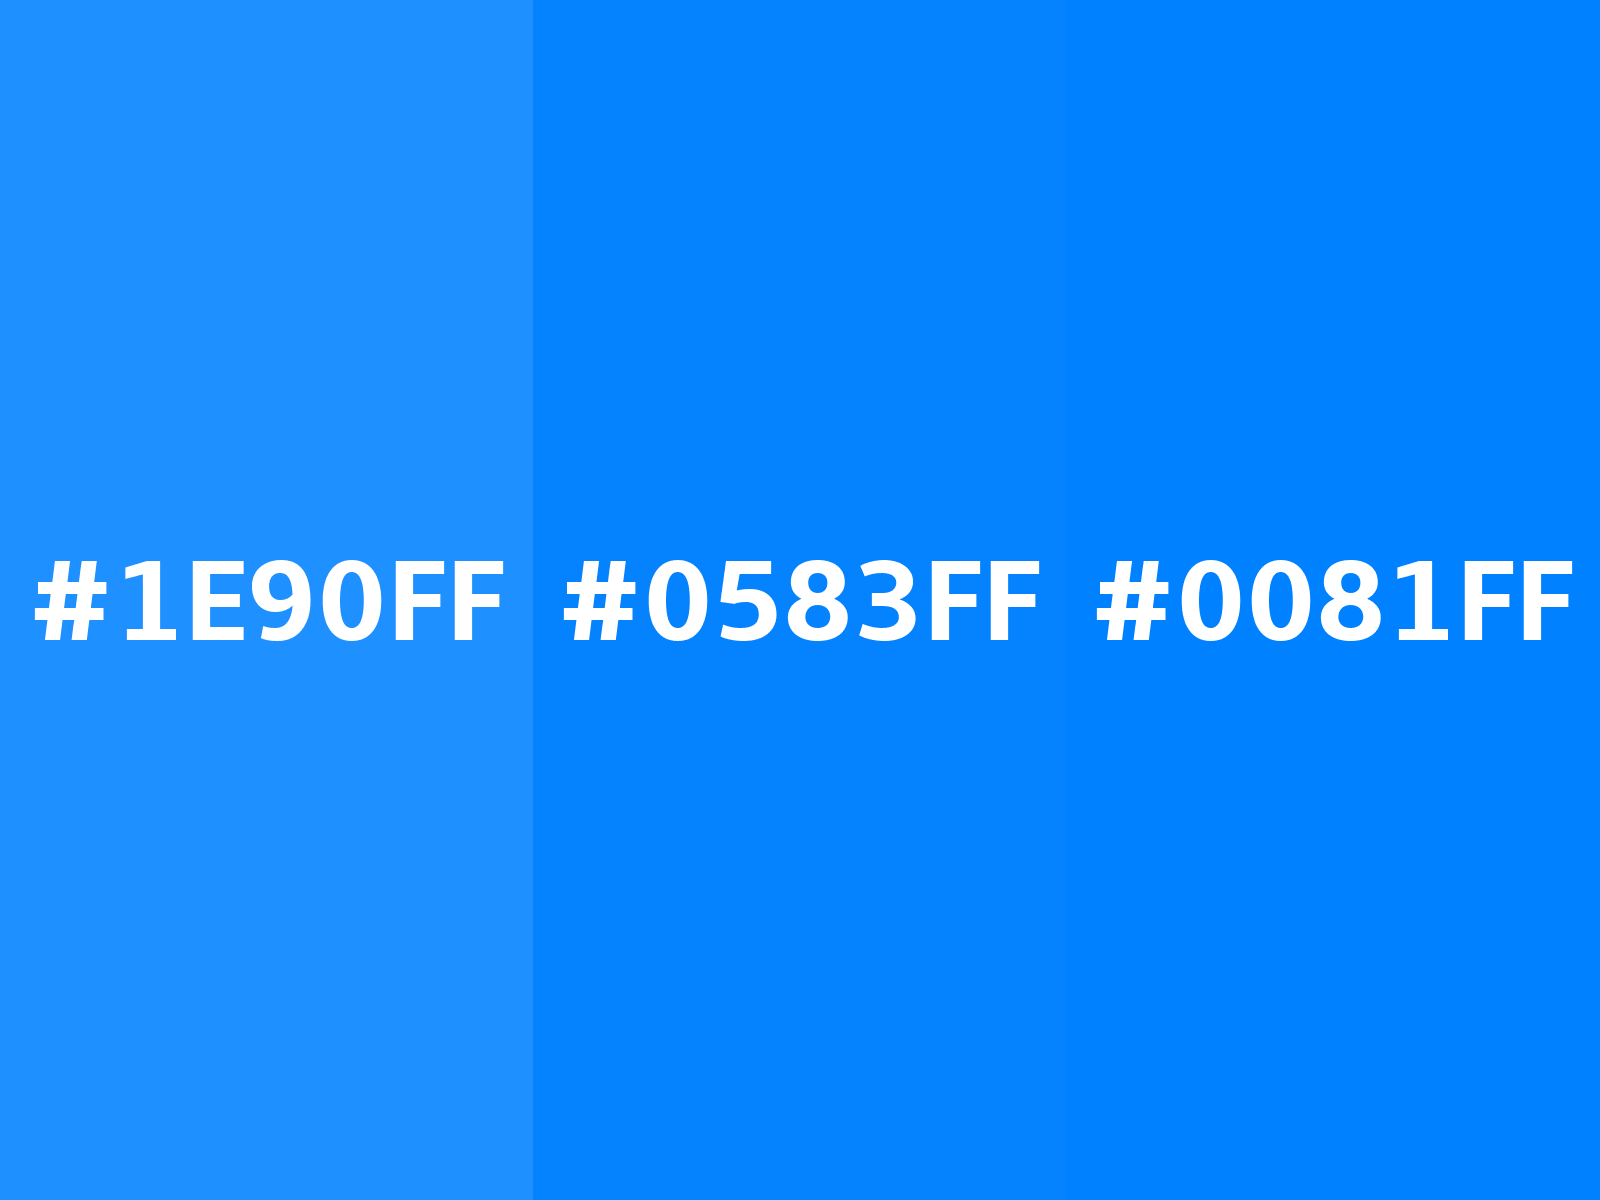 HEX color #1267FF, Color name: Dodger Blue, RGB(18,103,255), Windows:  16738066. - HTML CSS Color